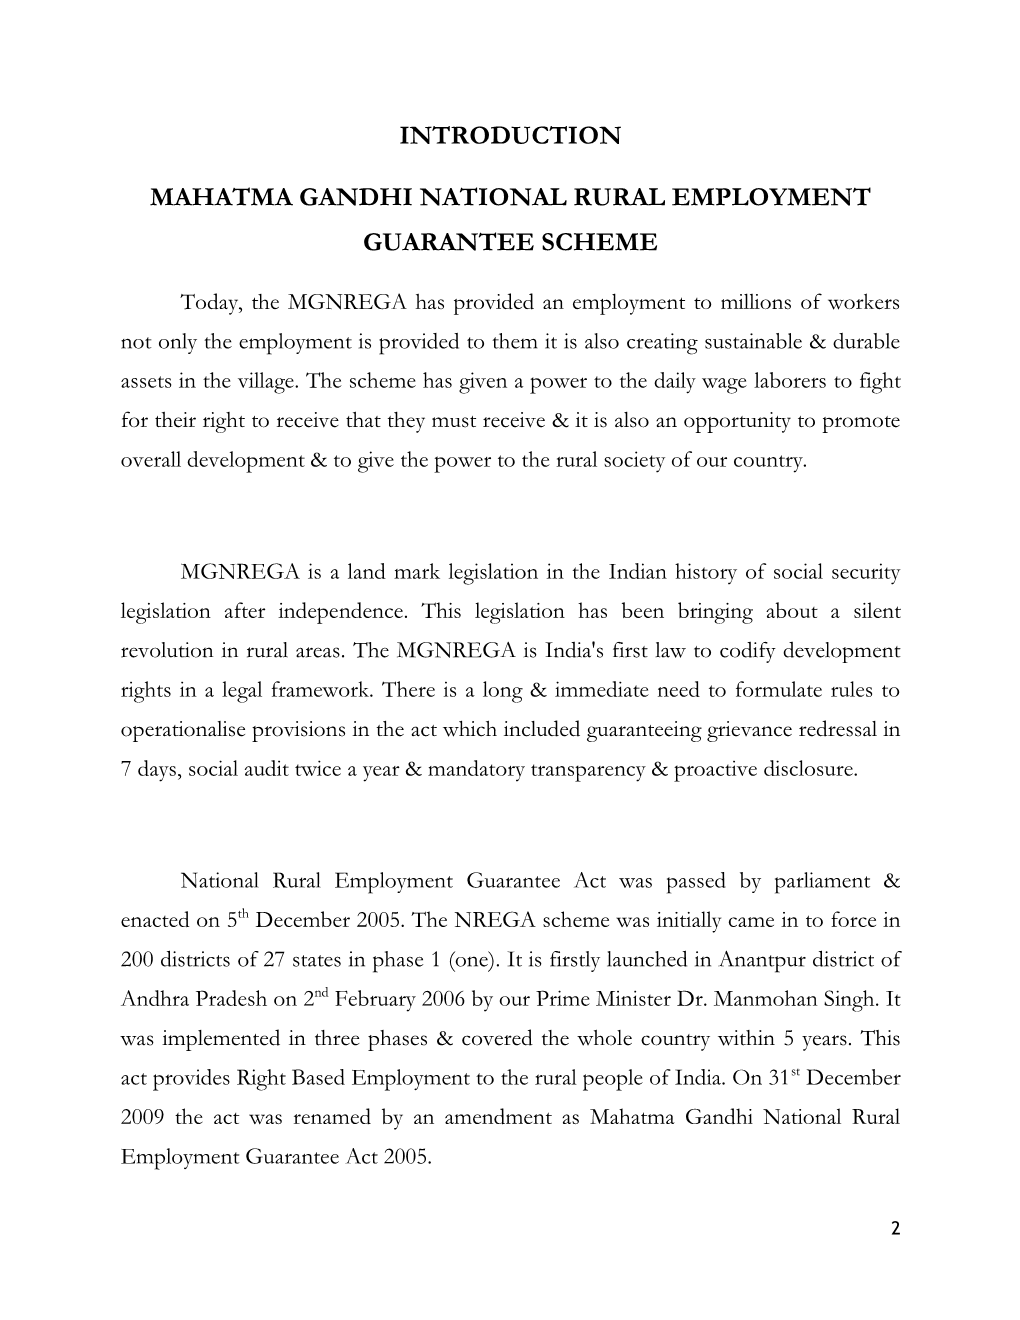 Introduction Mahatma Gandhi National Rural Employment